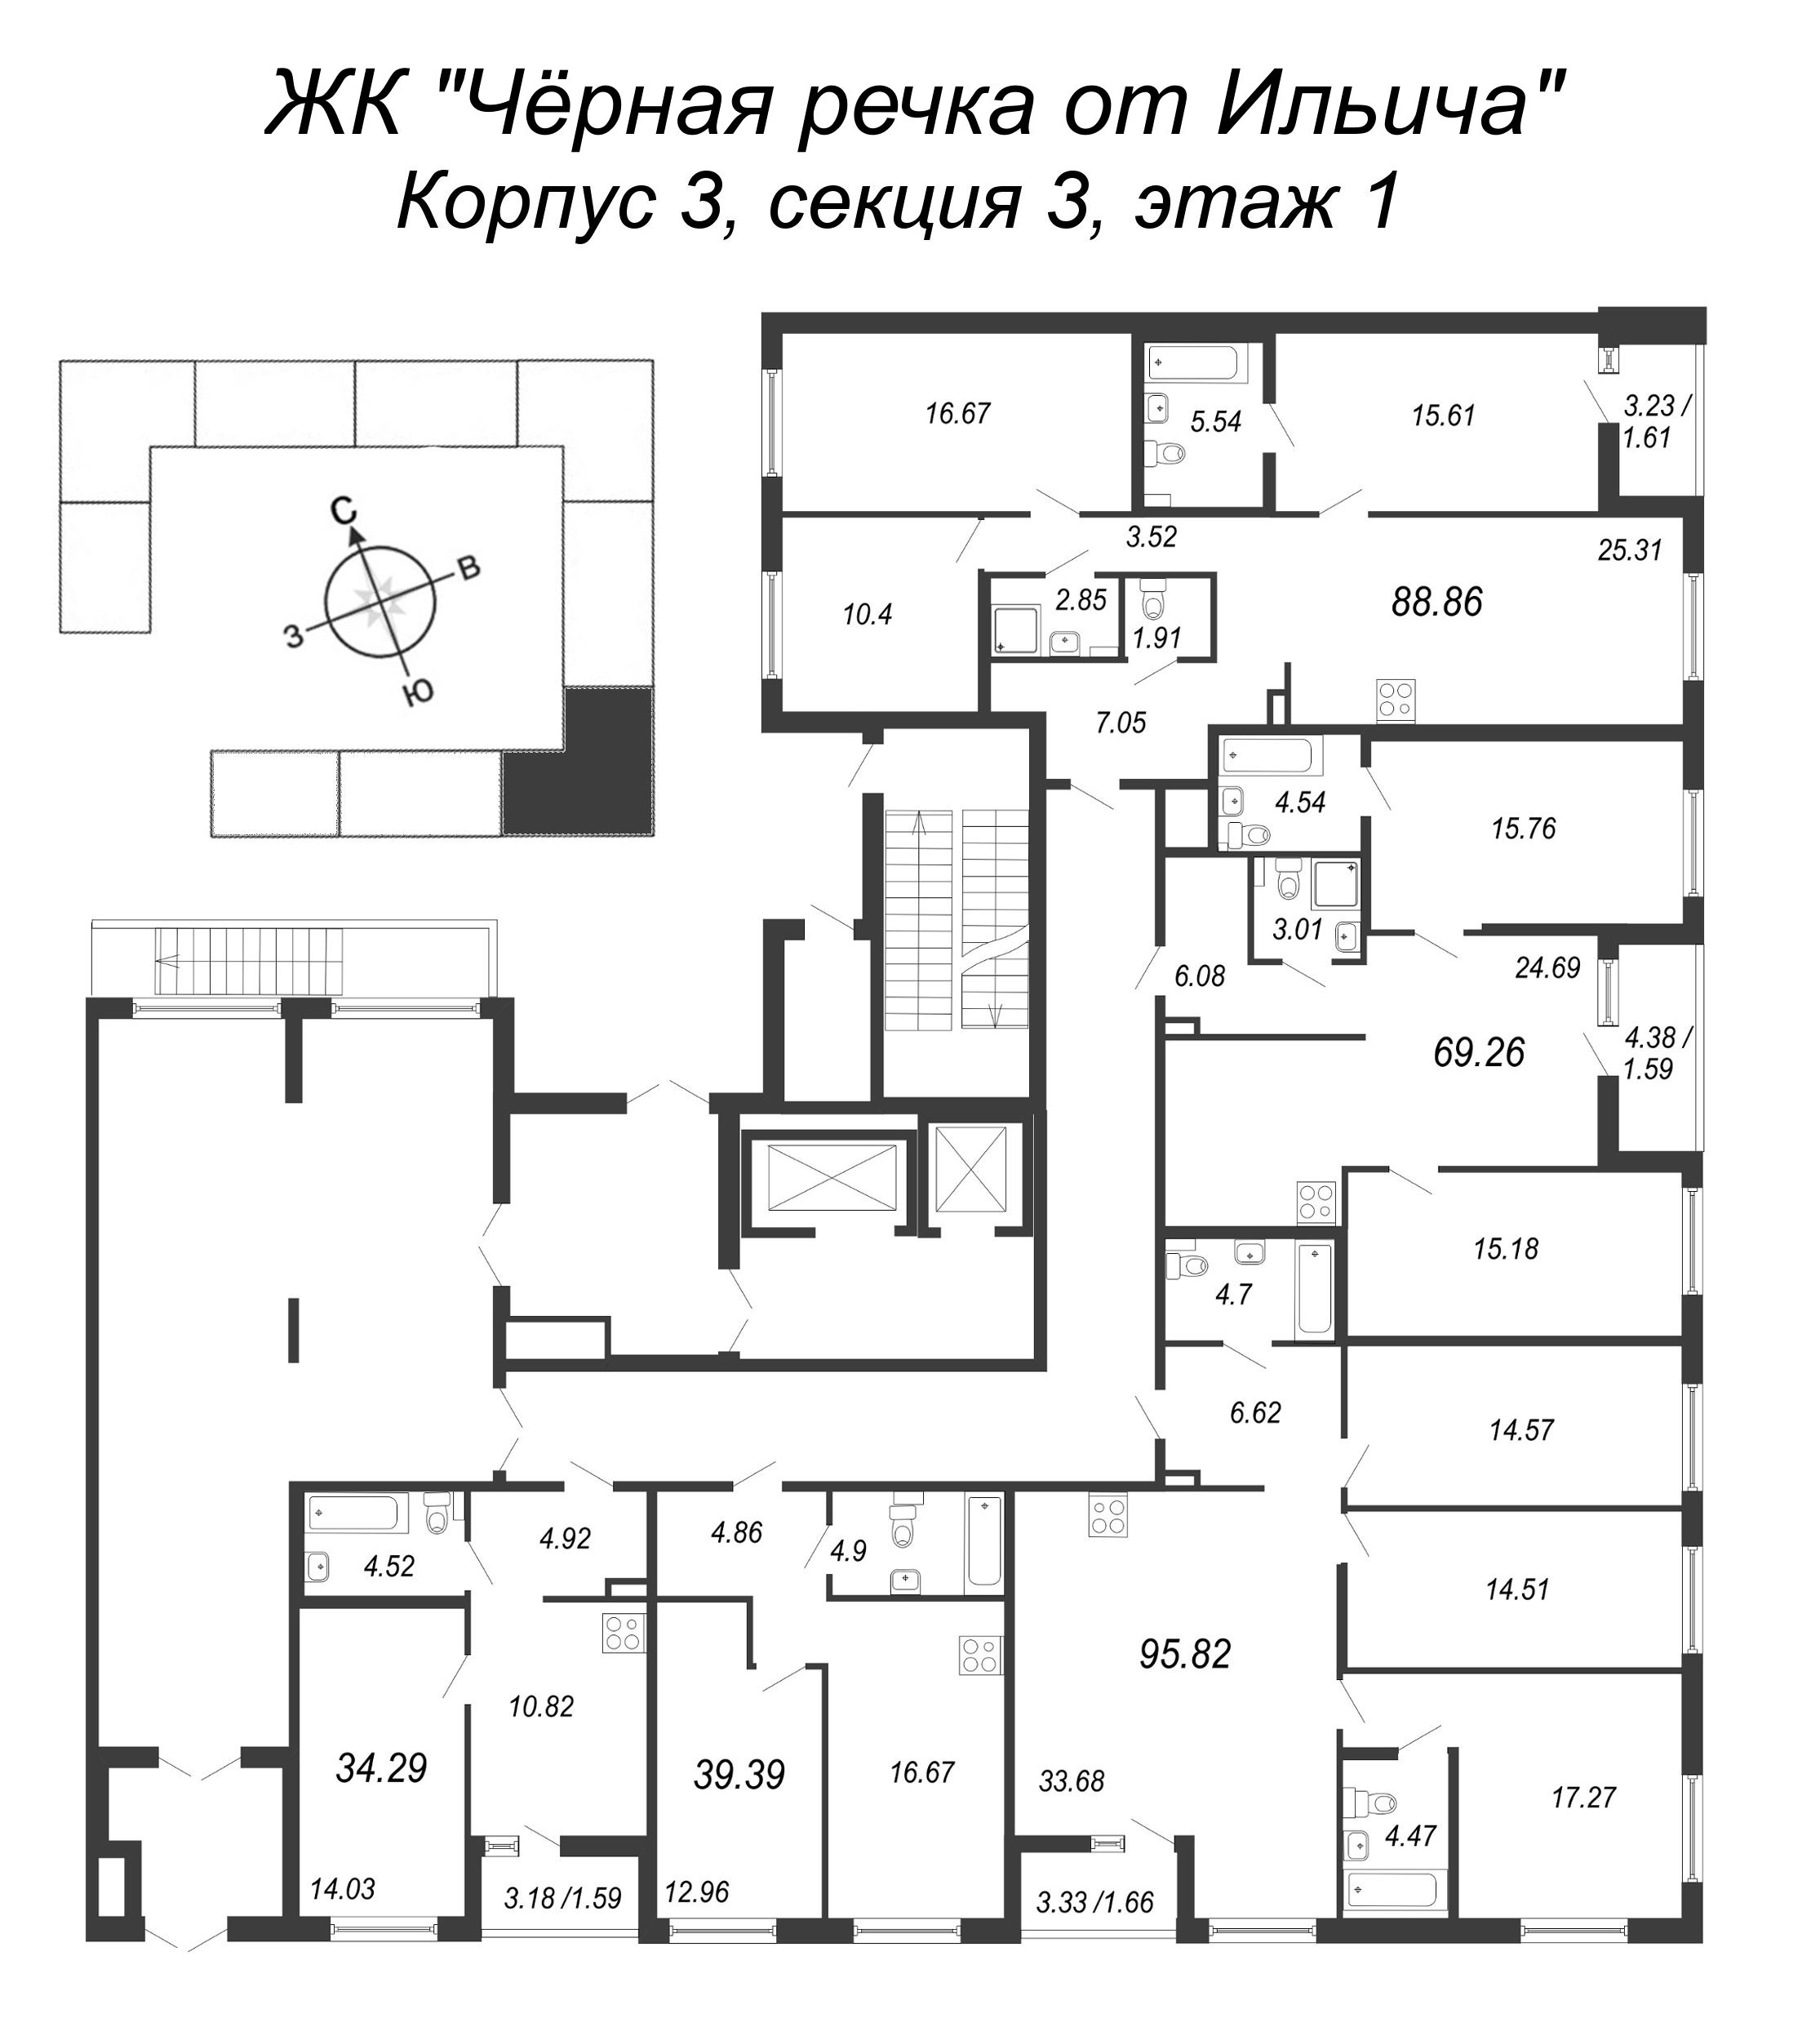 2-комнатная (Евро) квартира, 39.39 м² - планировка этажа